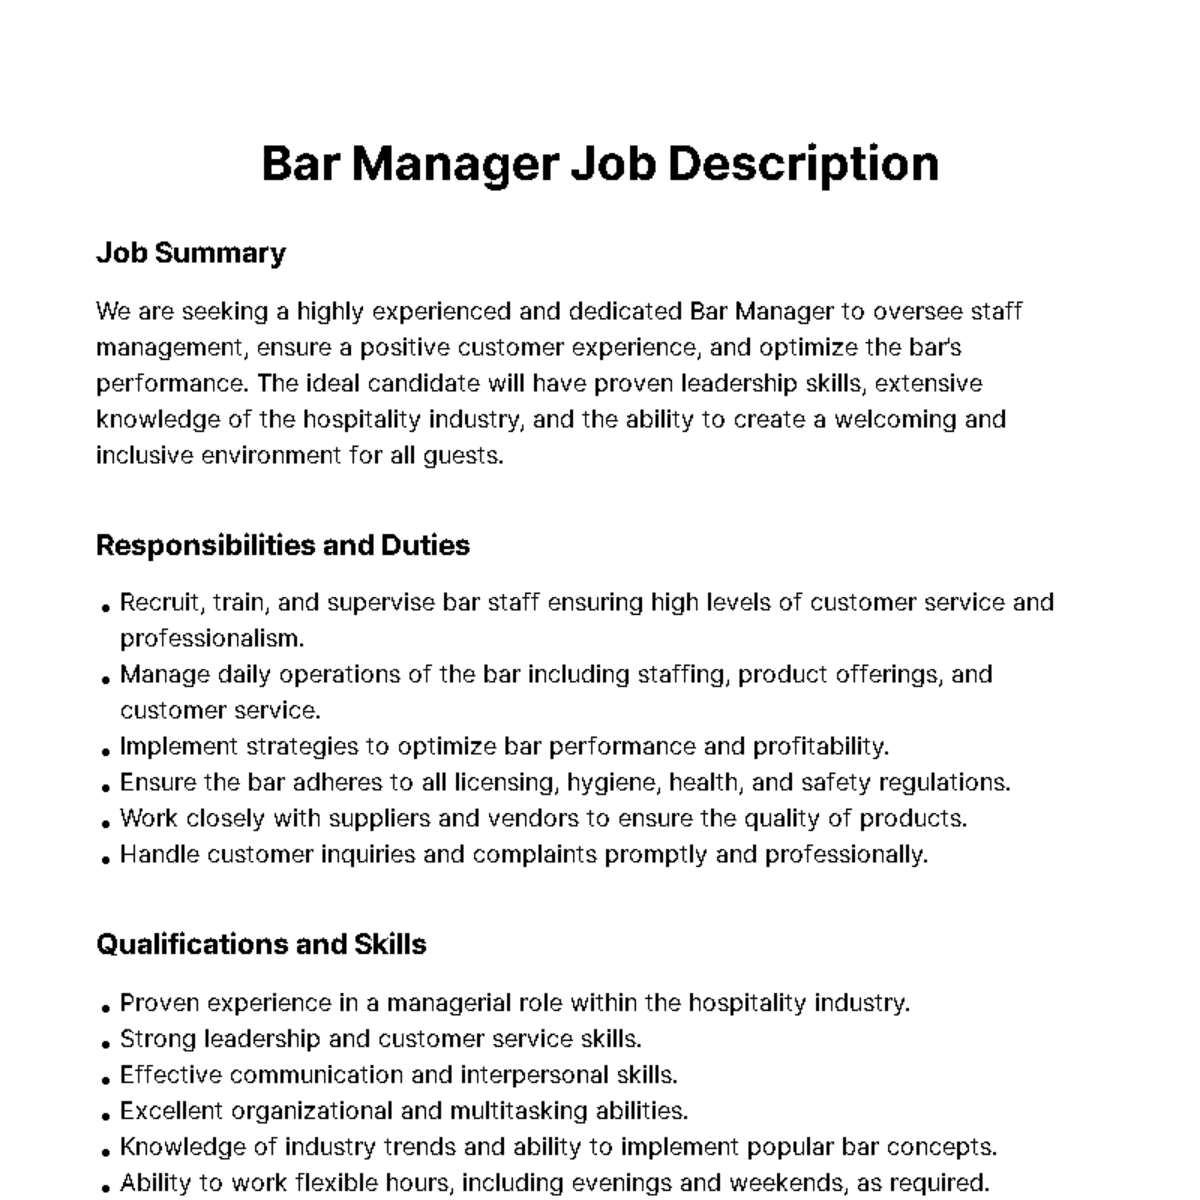 Bar Manager Job Description Template